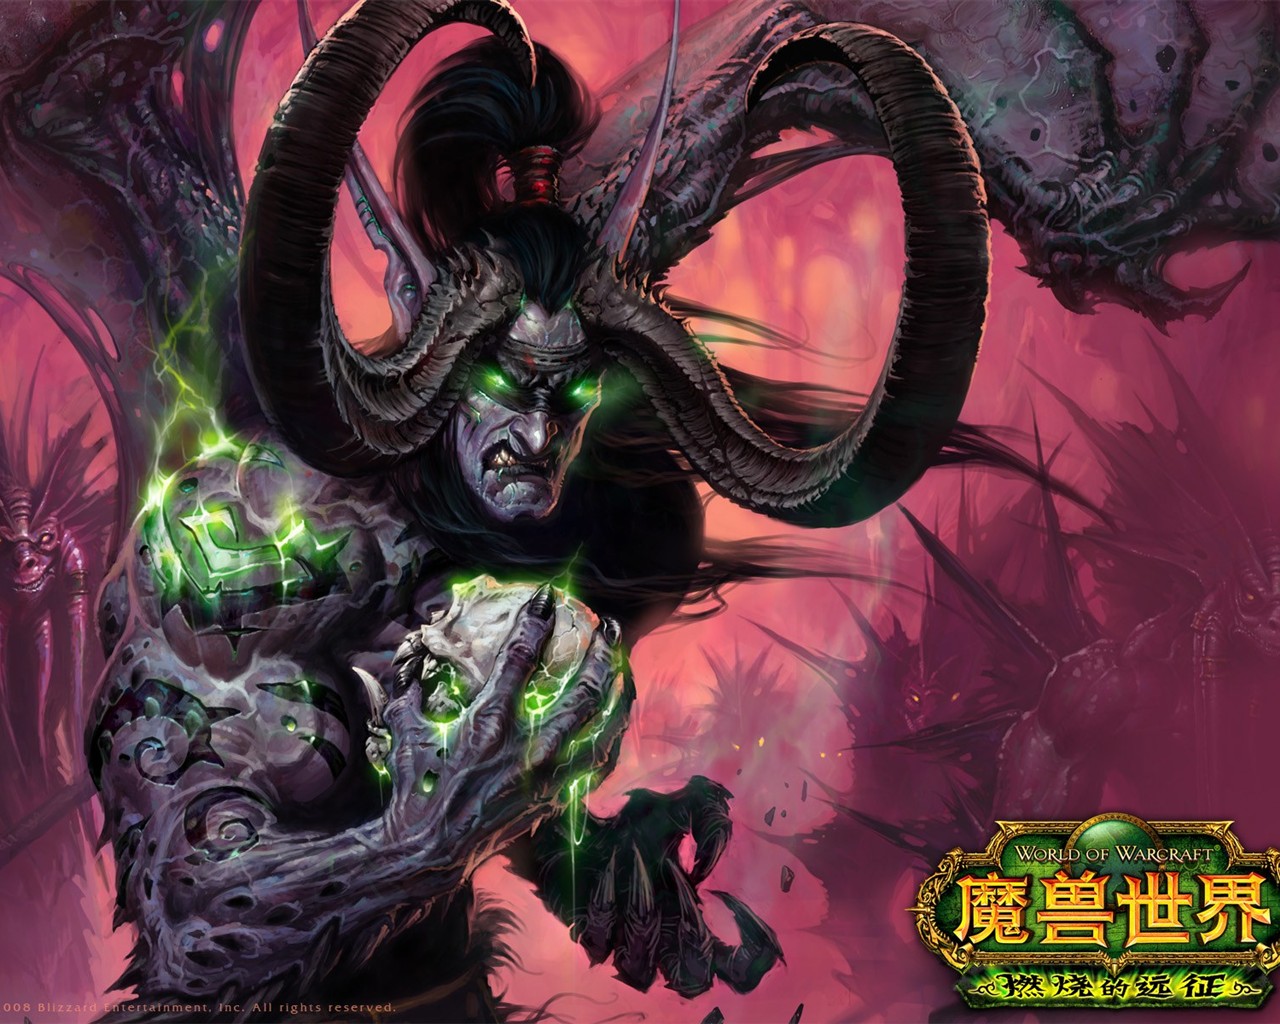 World of Warcraft: Fond d'écran officiel de Burning Crusade (2) #27 - 1280x1024